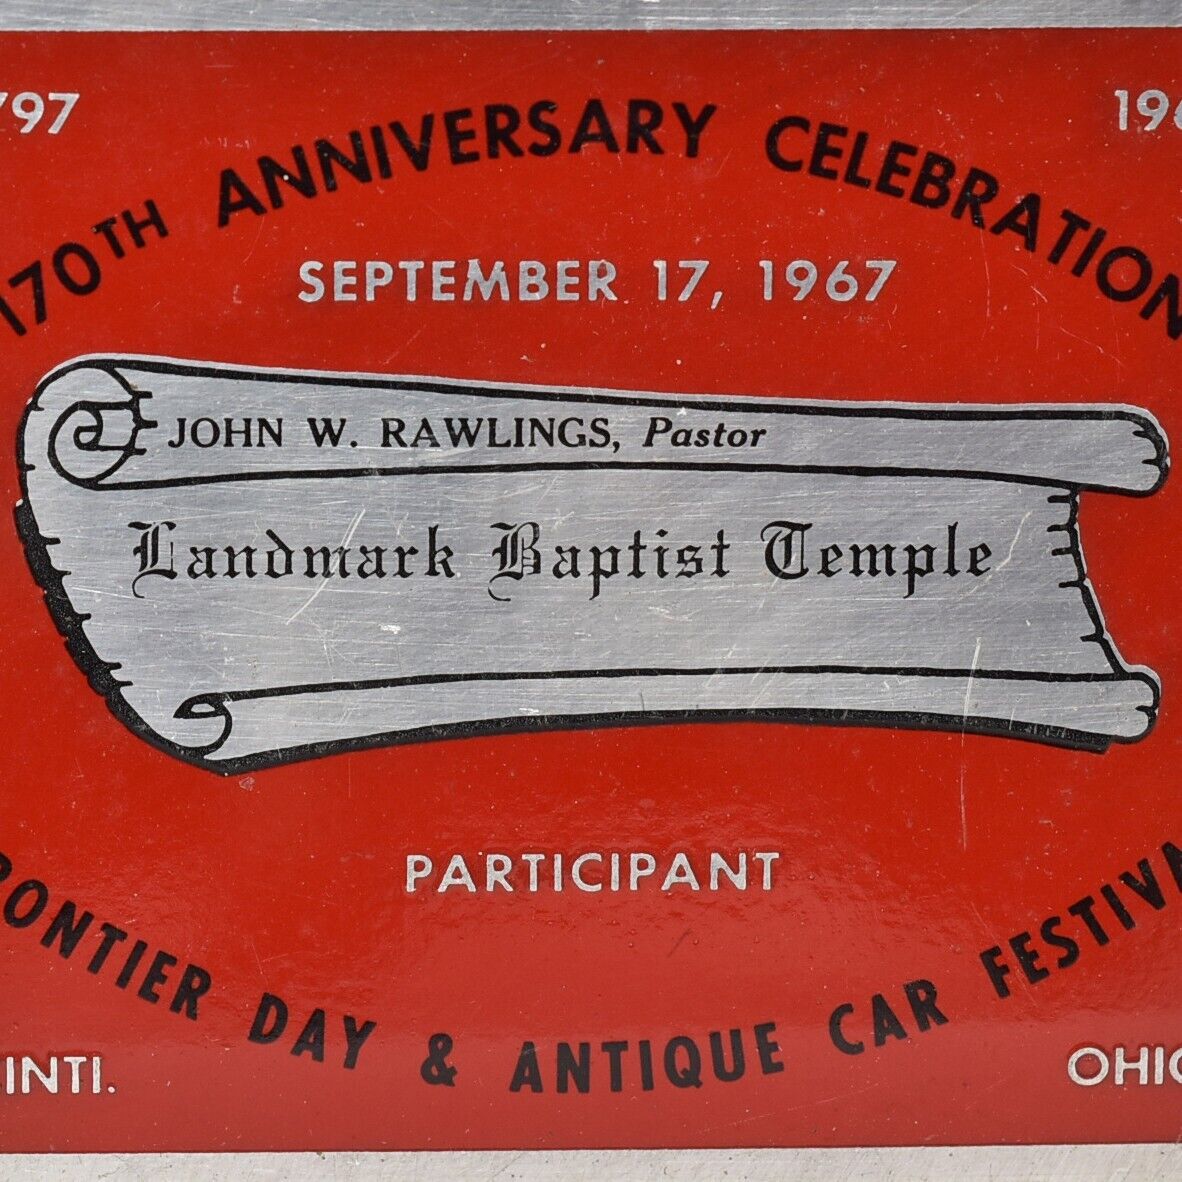 1967 Frontier Day Antique Car Festival Show Cincinnati Landmark Baptist Temple